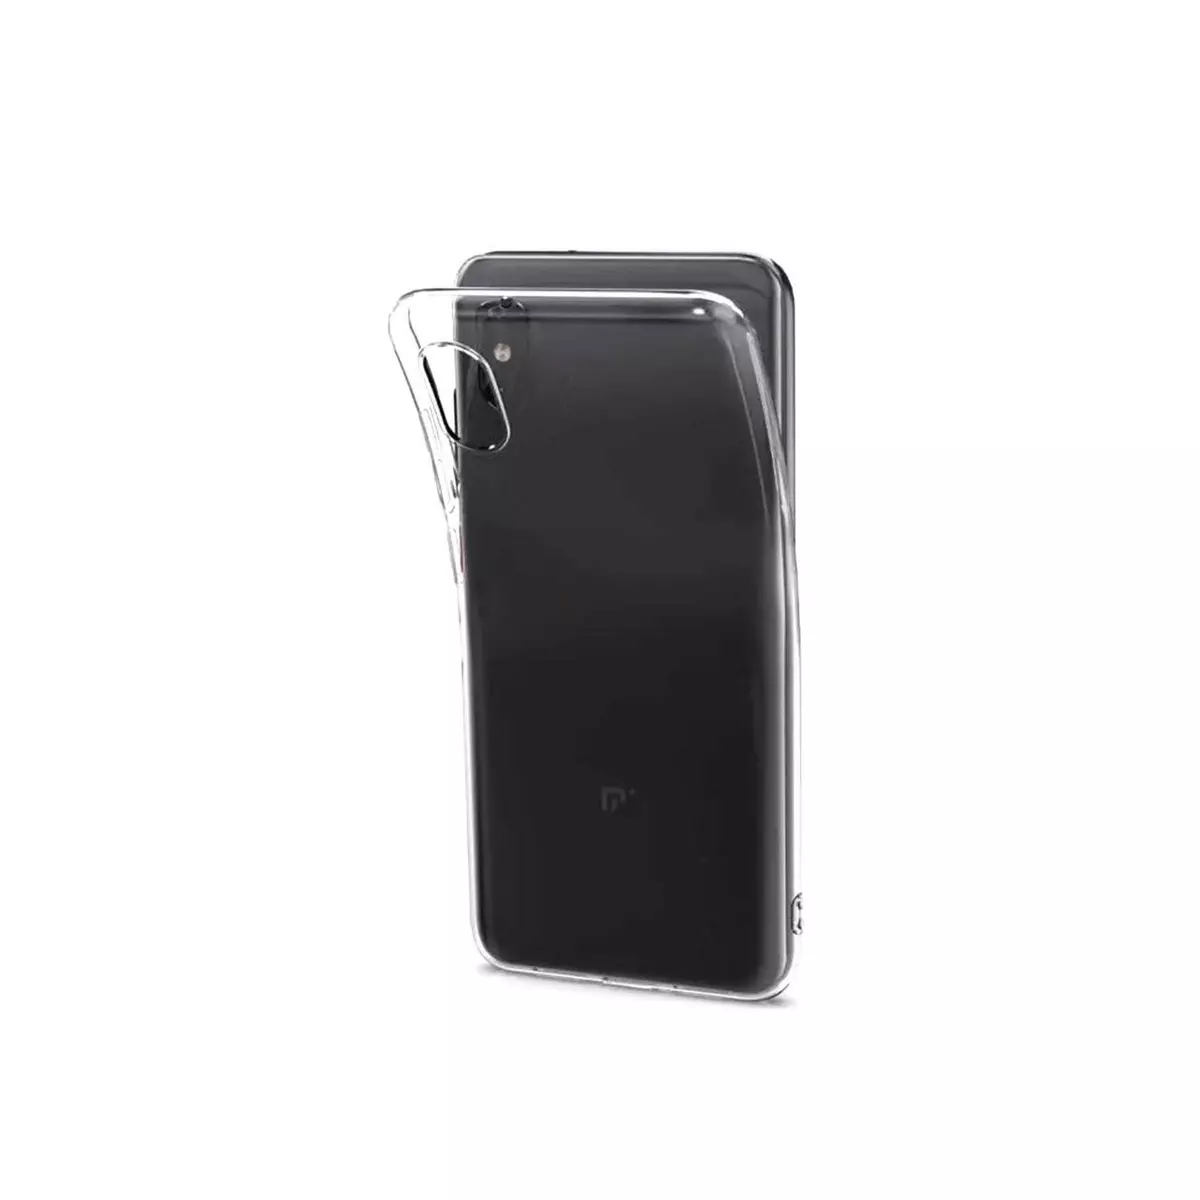 amahousse Coque Xiaomi Mi 8 extra fine souple transparente résistante